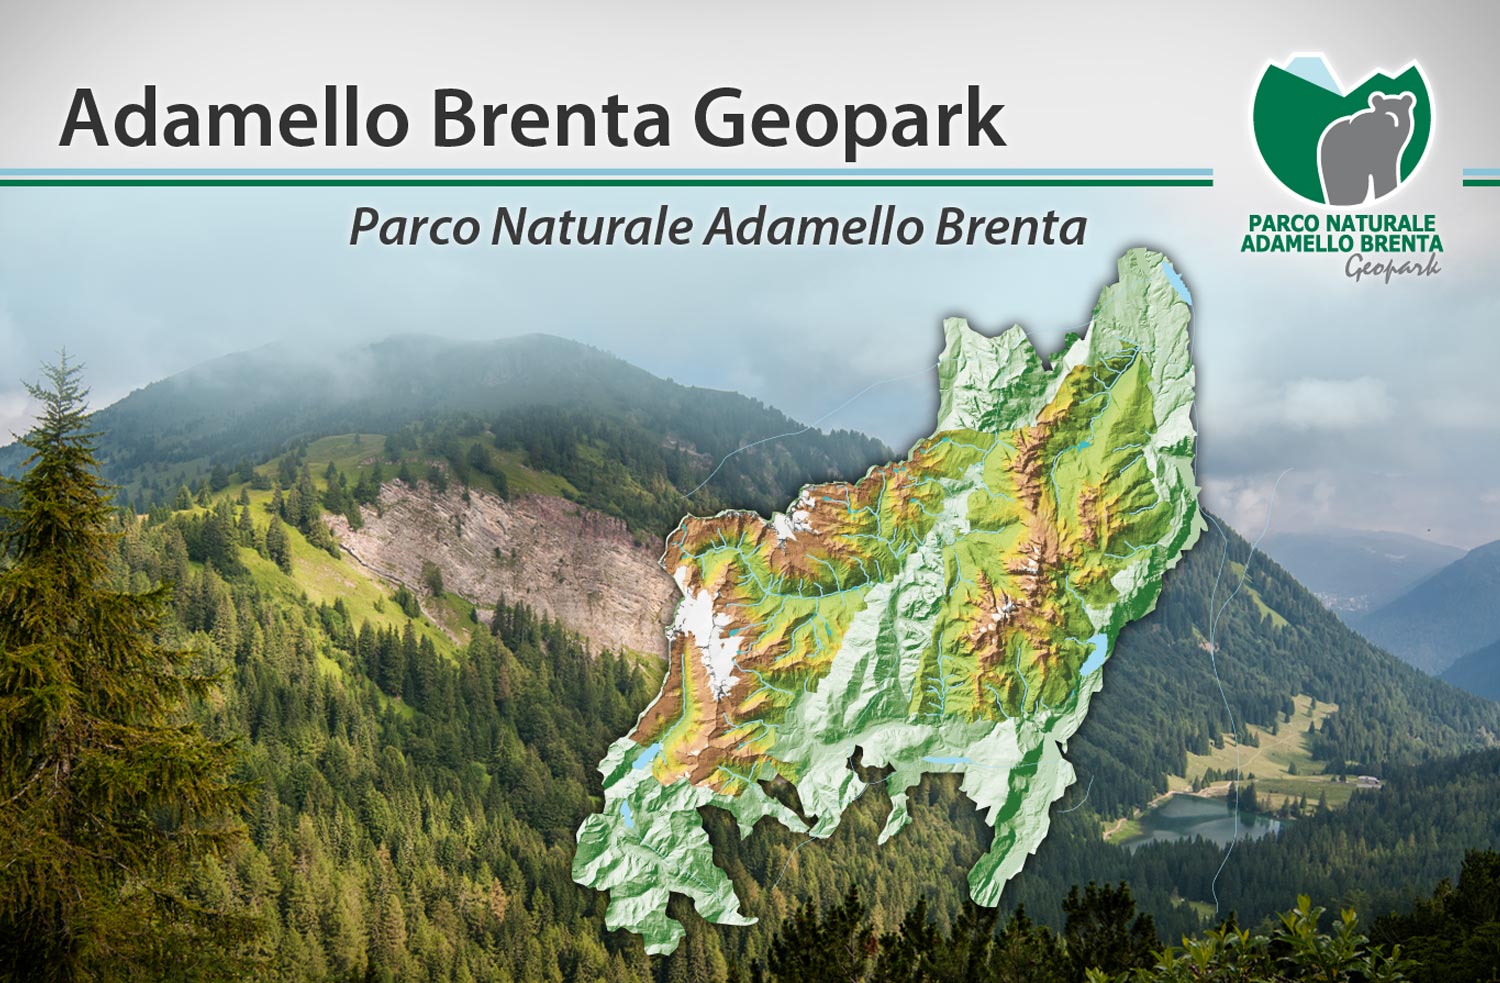 Adamello Brenta Geopark